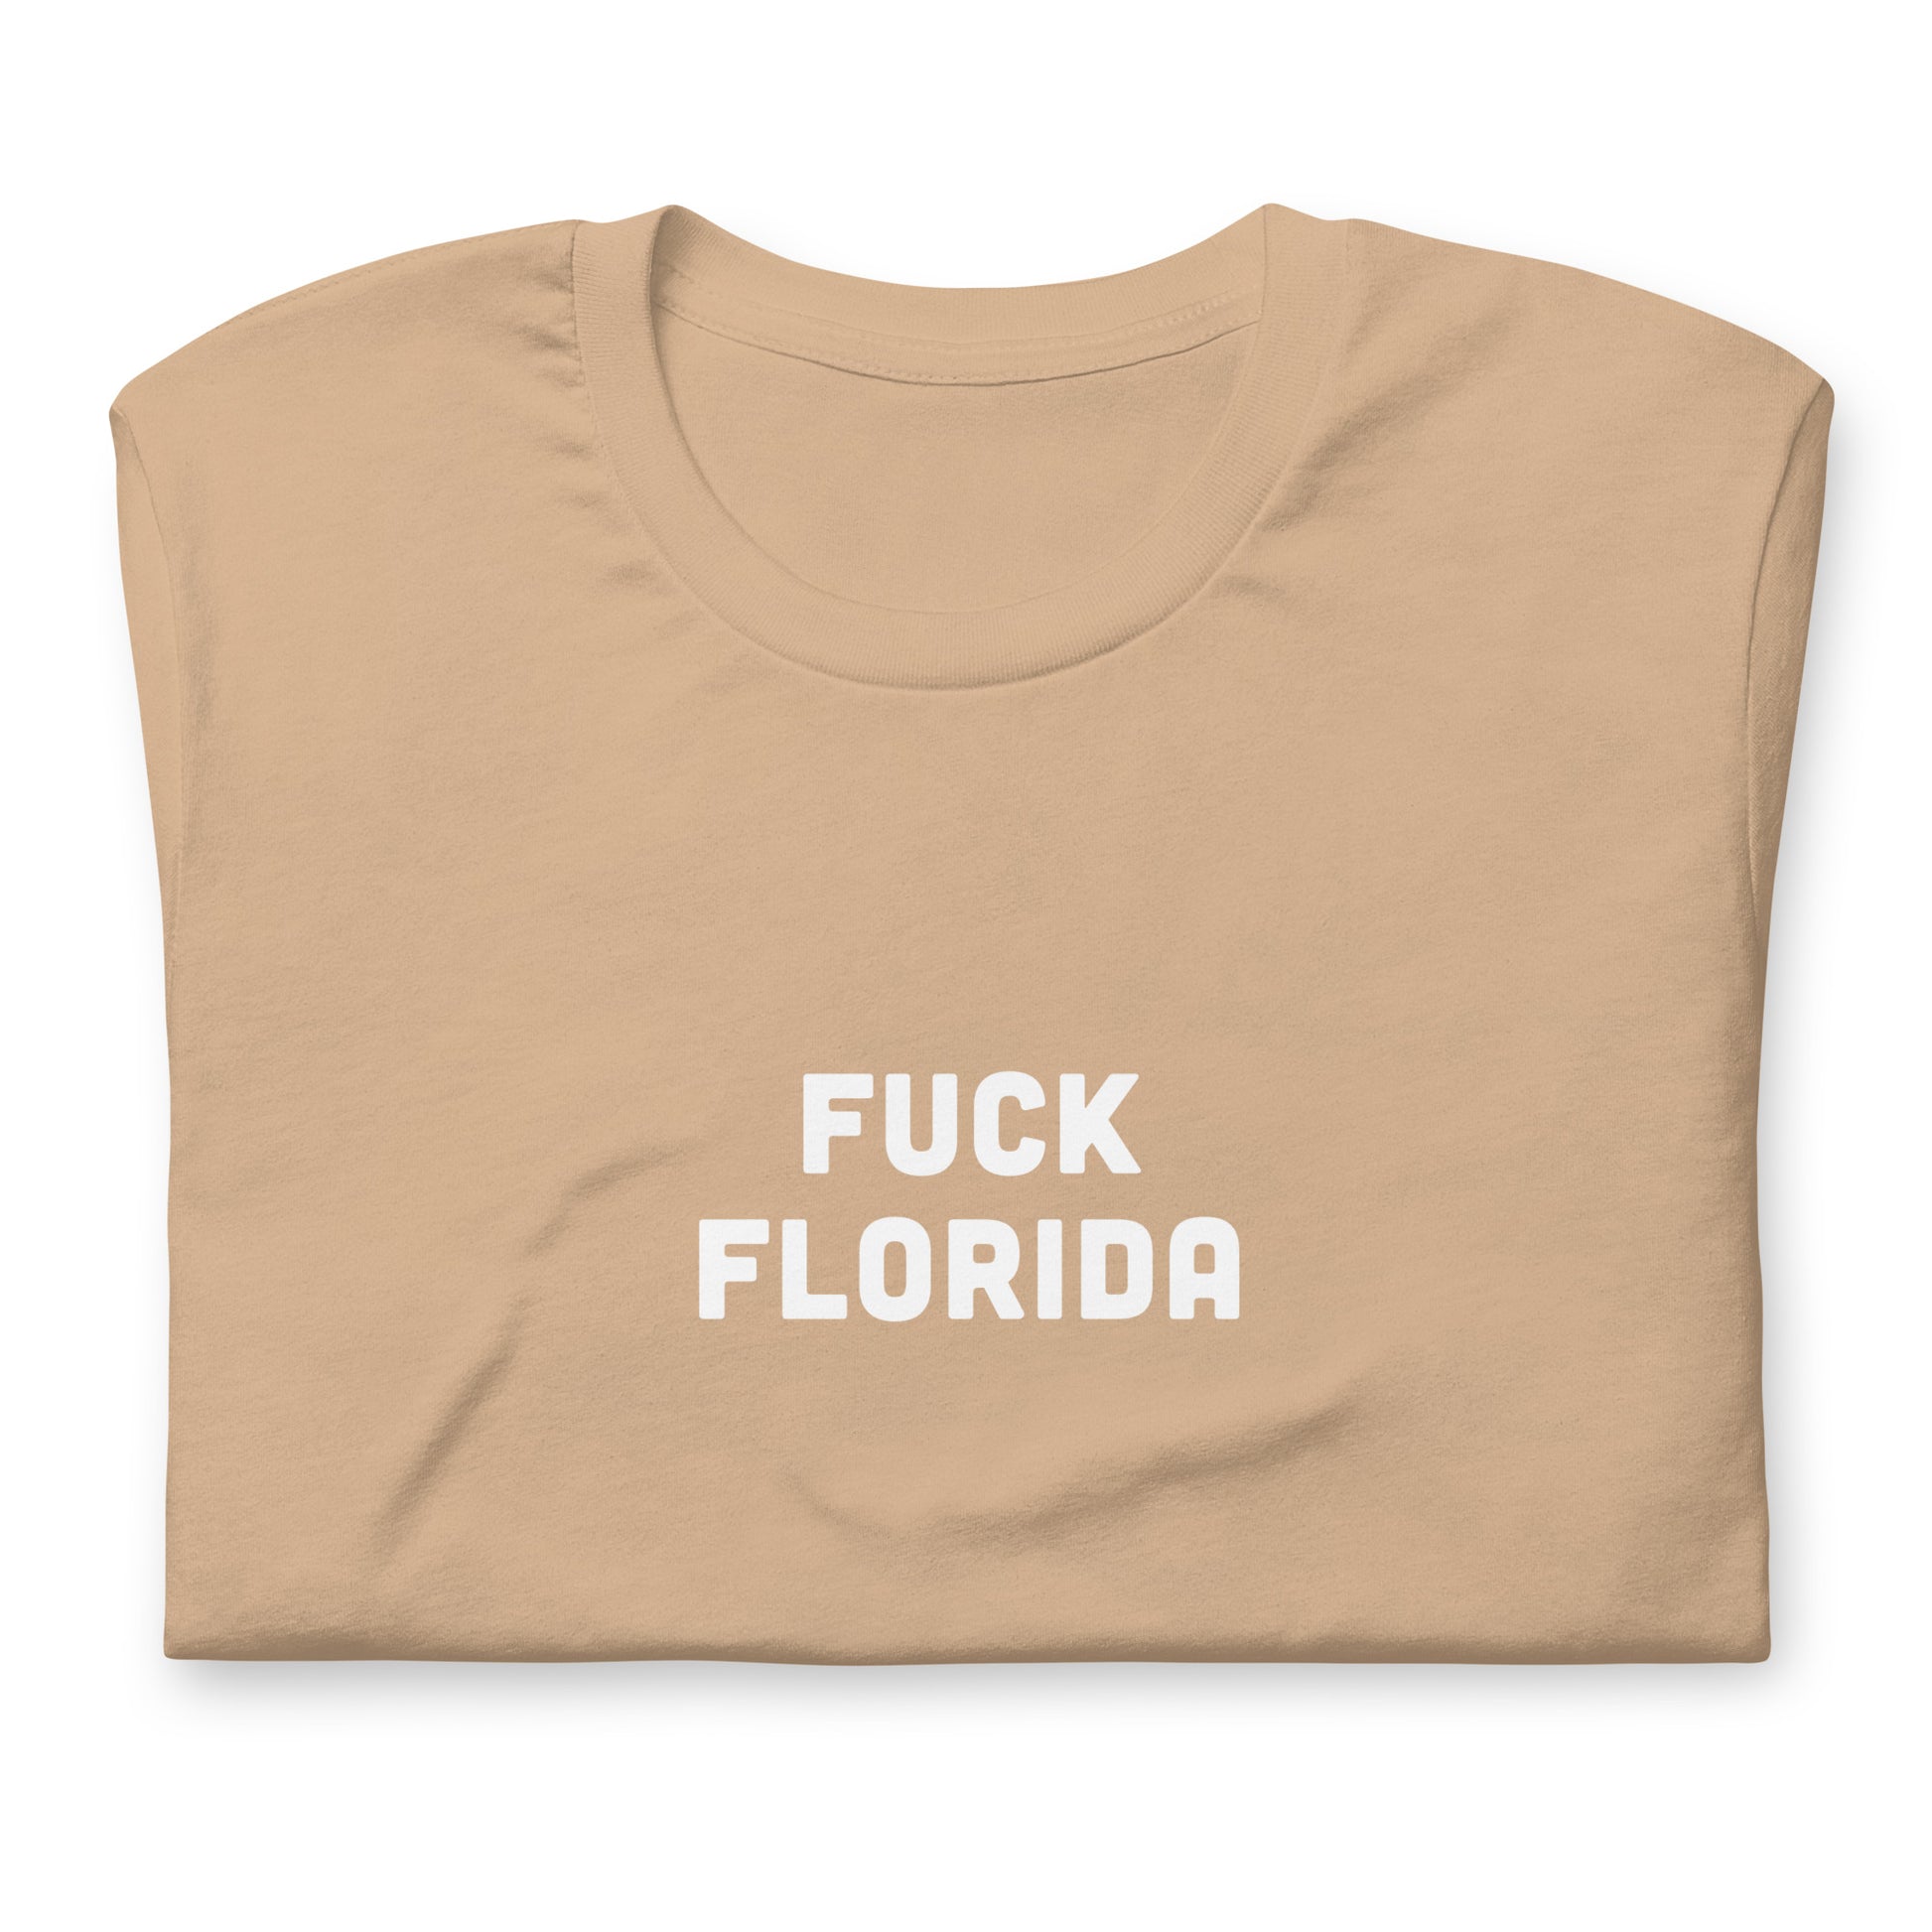 Fuck Florida T-Shirt Size 2XL Color Forest